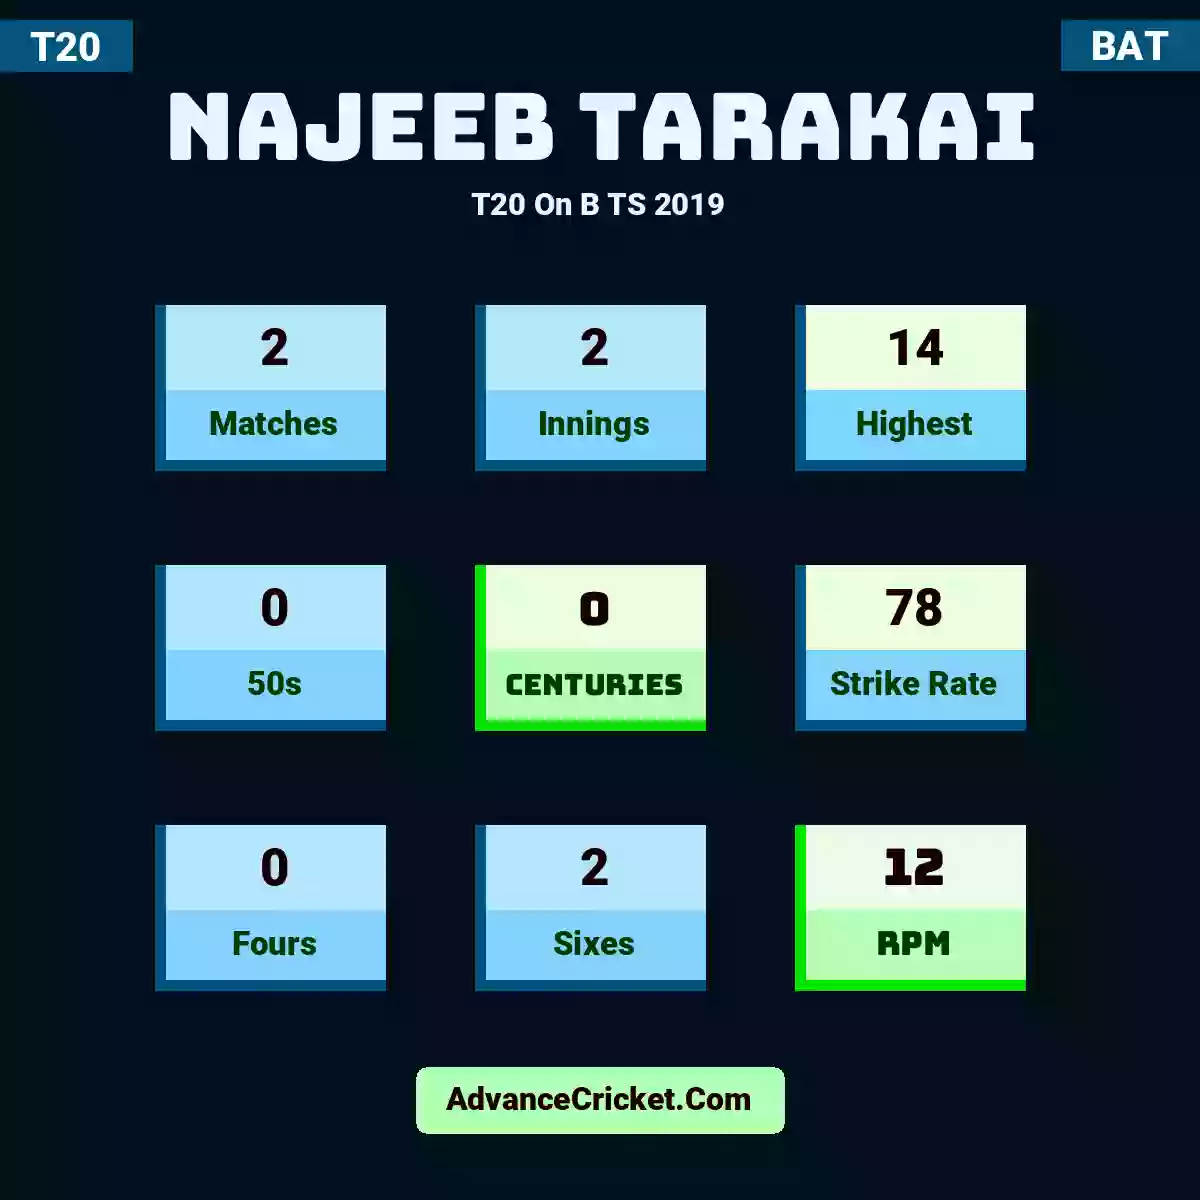 Najeeb Tarakai T20  On B TS 2019, Najeeb Tarakai played 2 matches, scored 14 runs as highest, 0 half-centuries, and 0 centuries, with a strike rate of 78. N.Tarakai hit 0 fours and 2 sixes, with an RPM of 12.